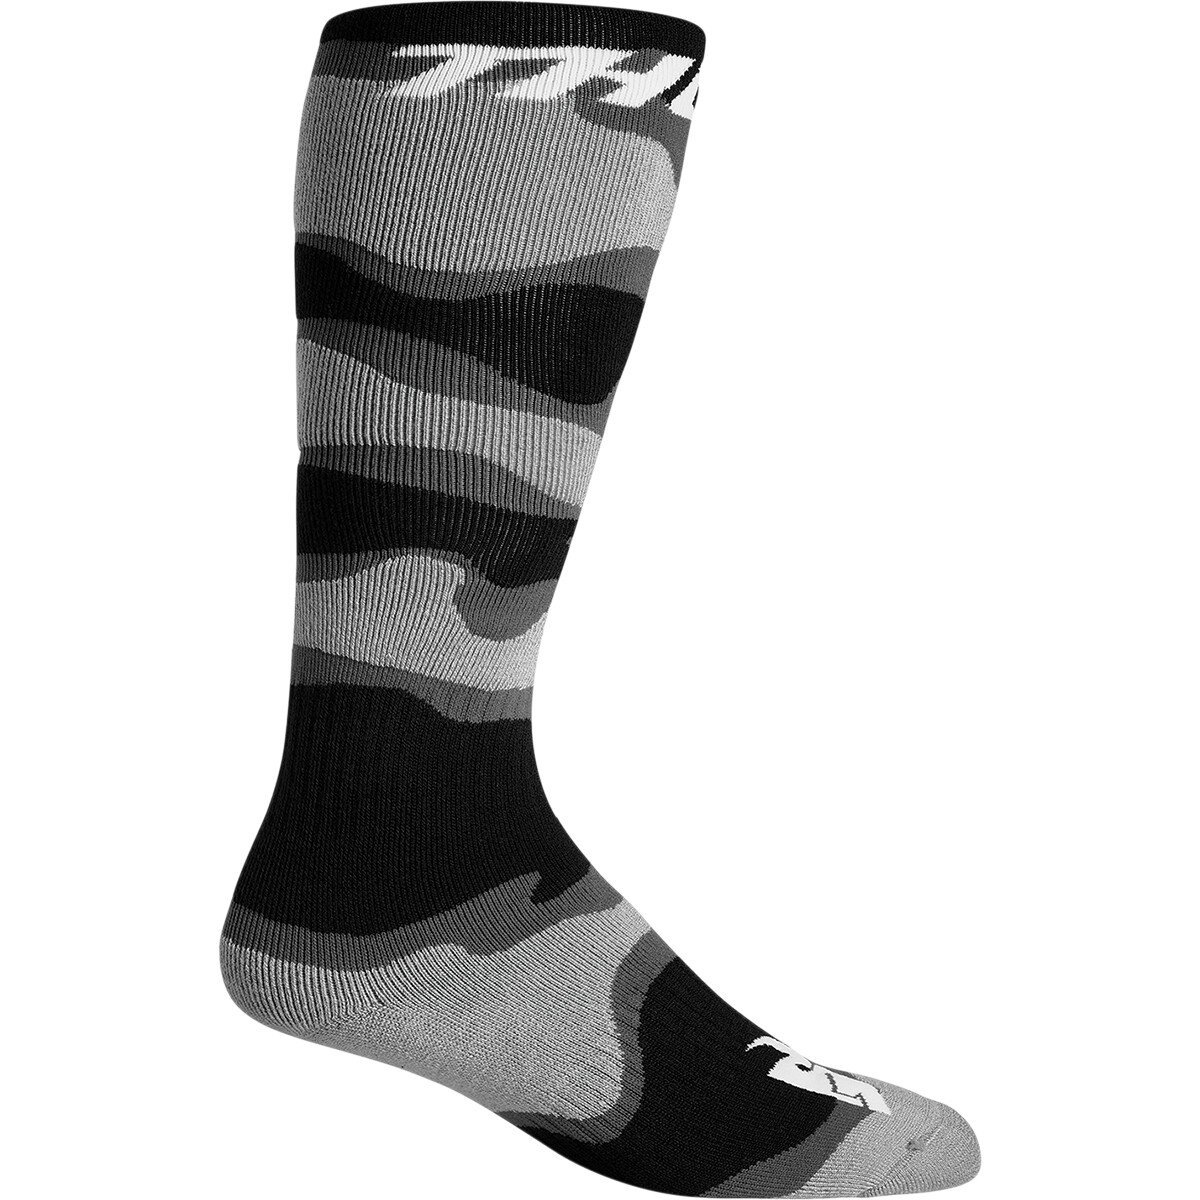 Ponožky THOR šedo/zeleno/černé 6-9